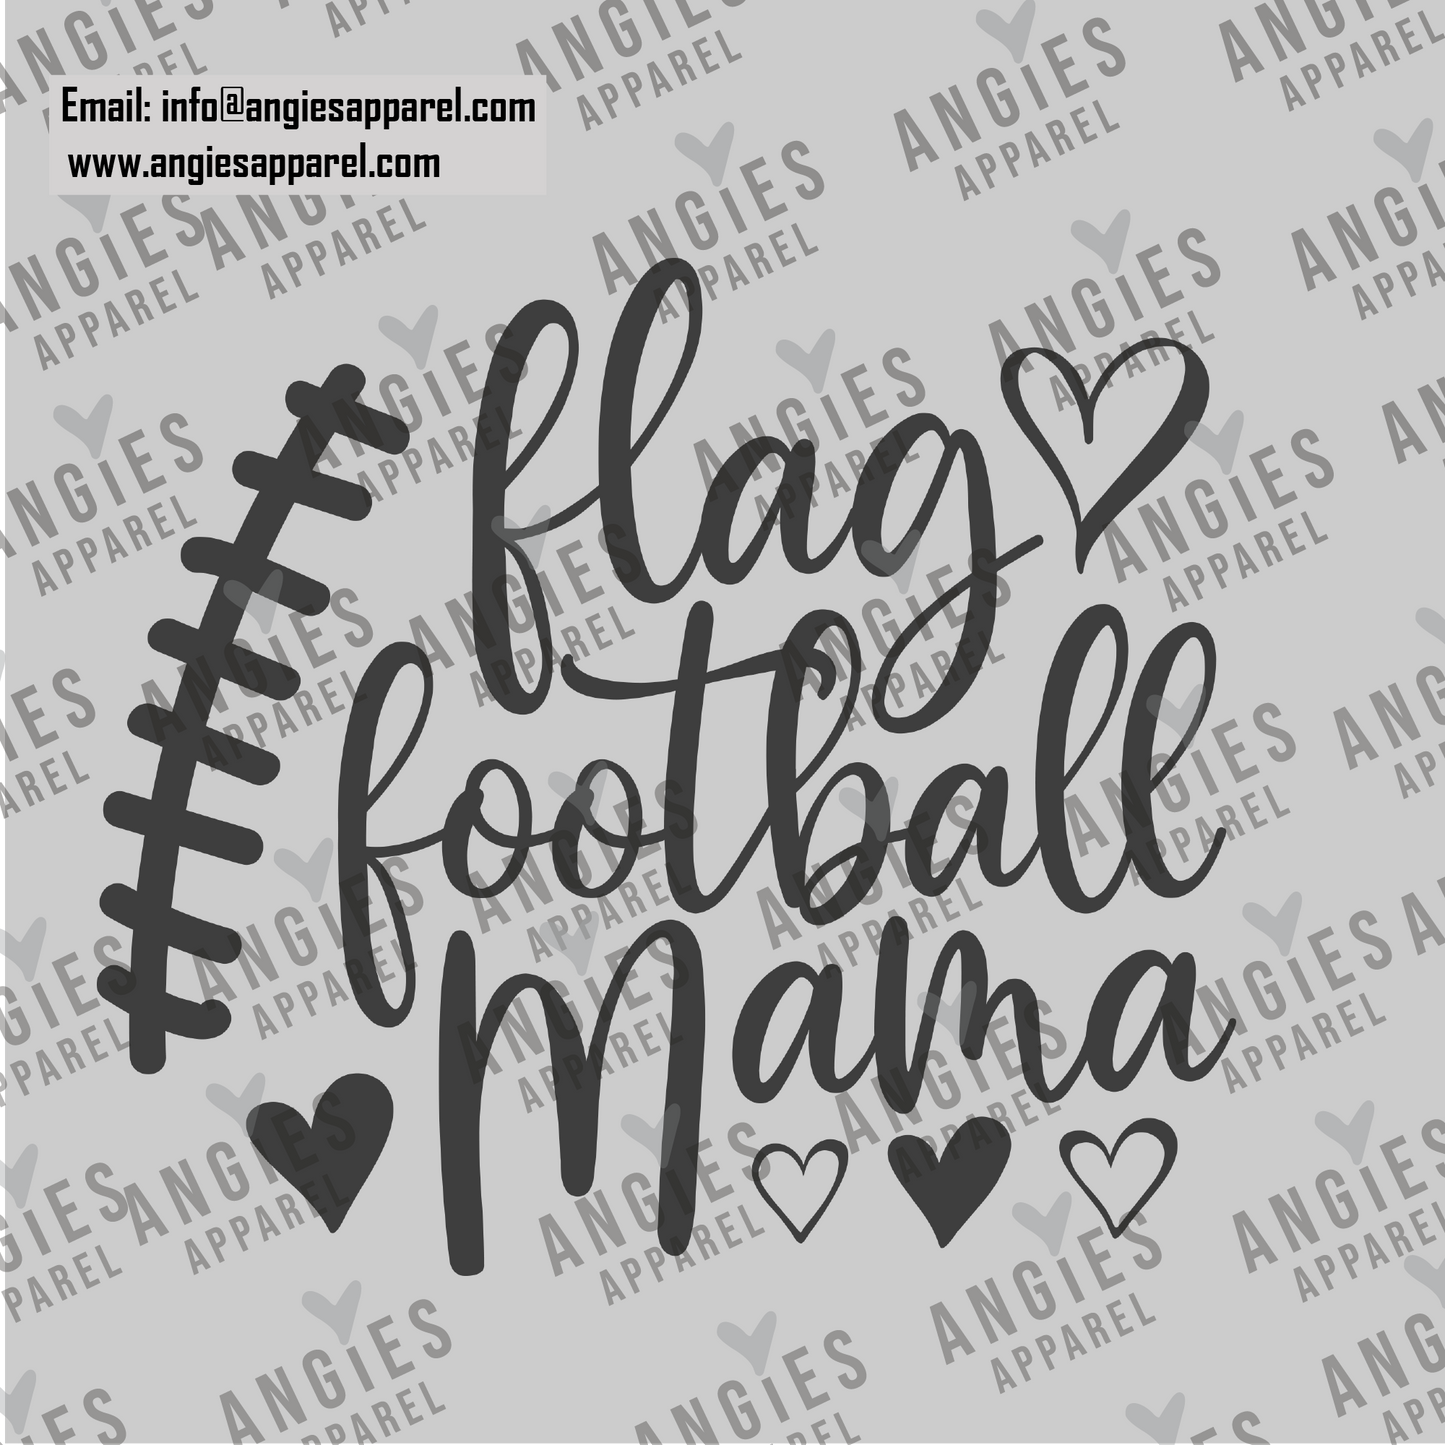 8. Flag Football Mama